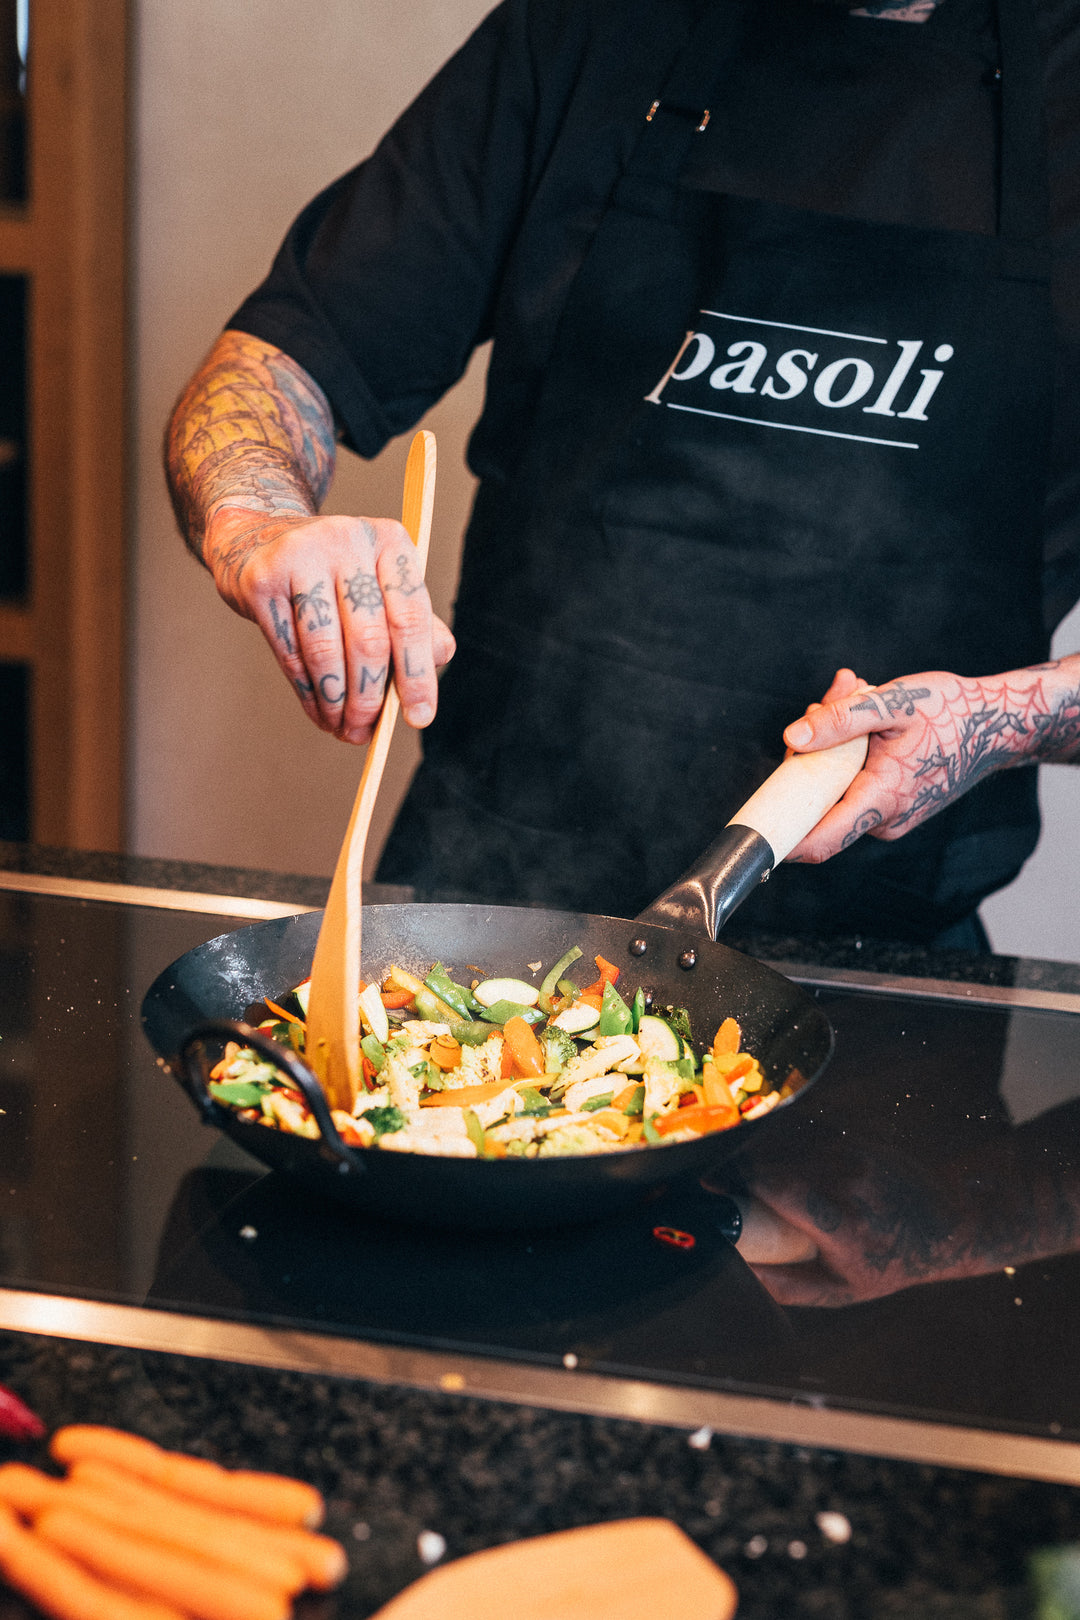 Il nostro chef professionista Mane arrostisce le verdure nel nostro pasoli wok.